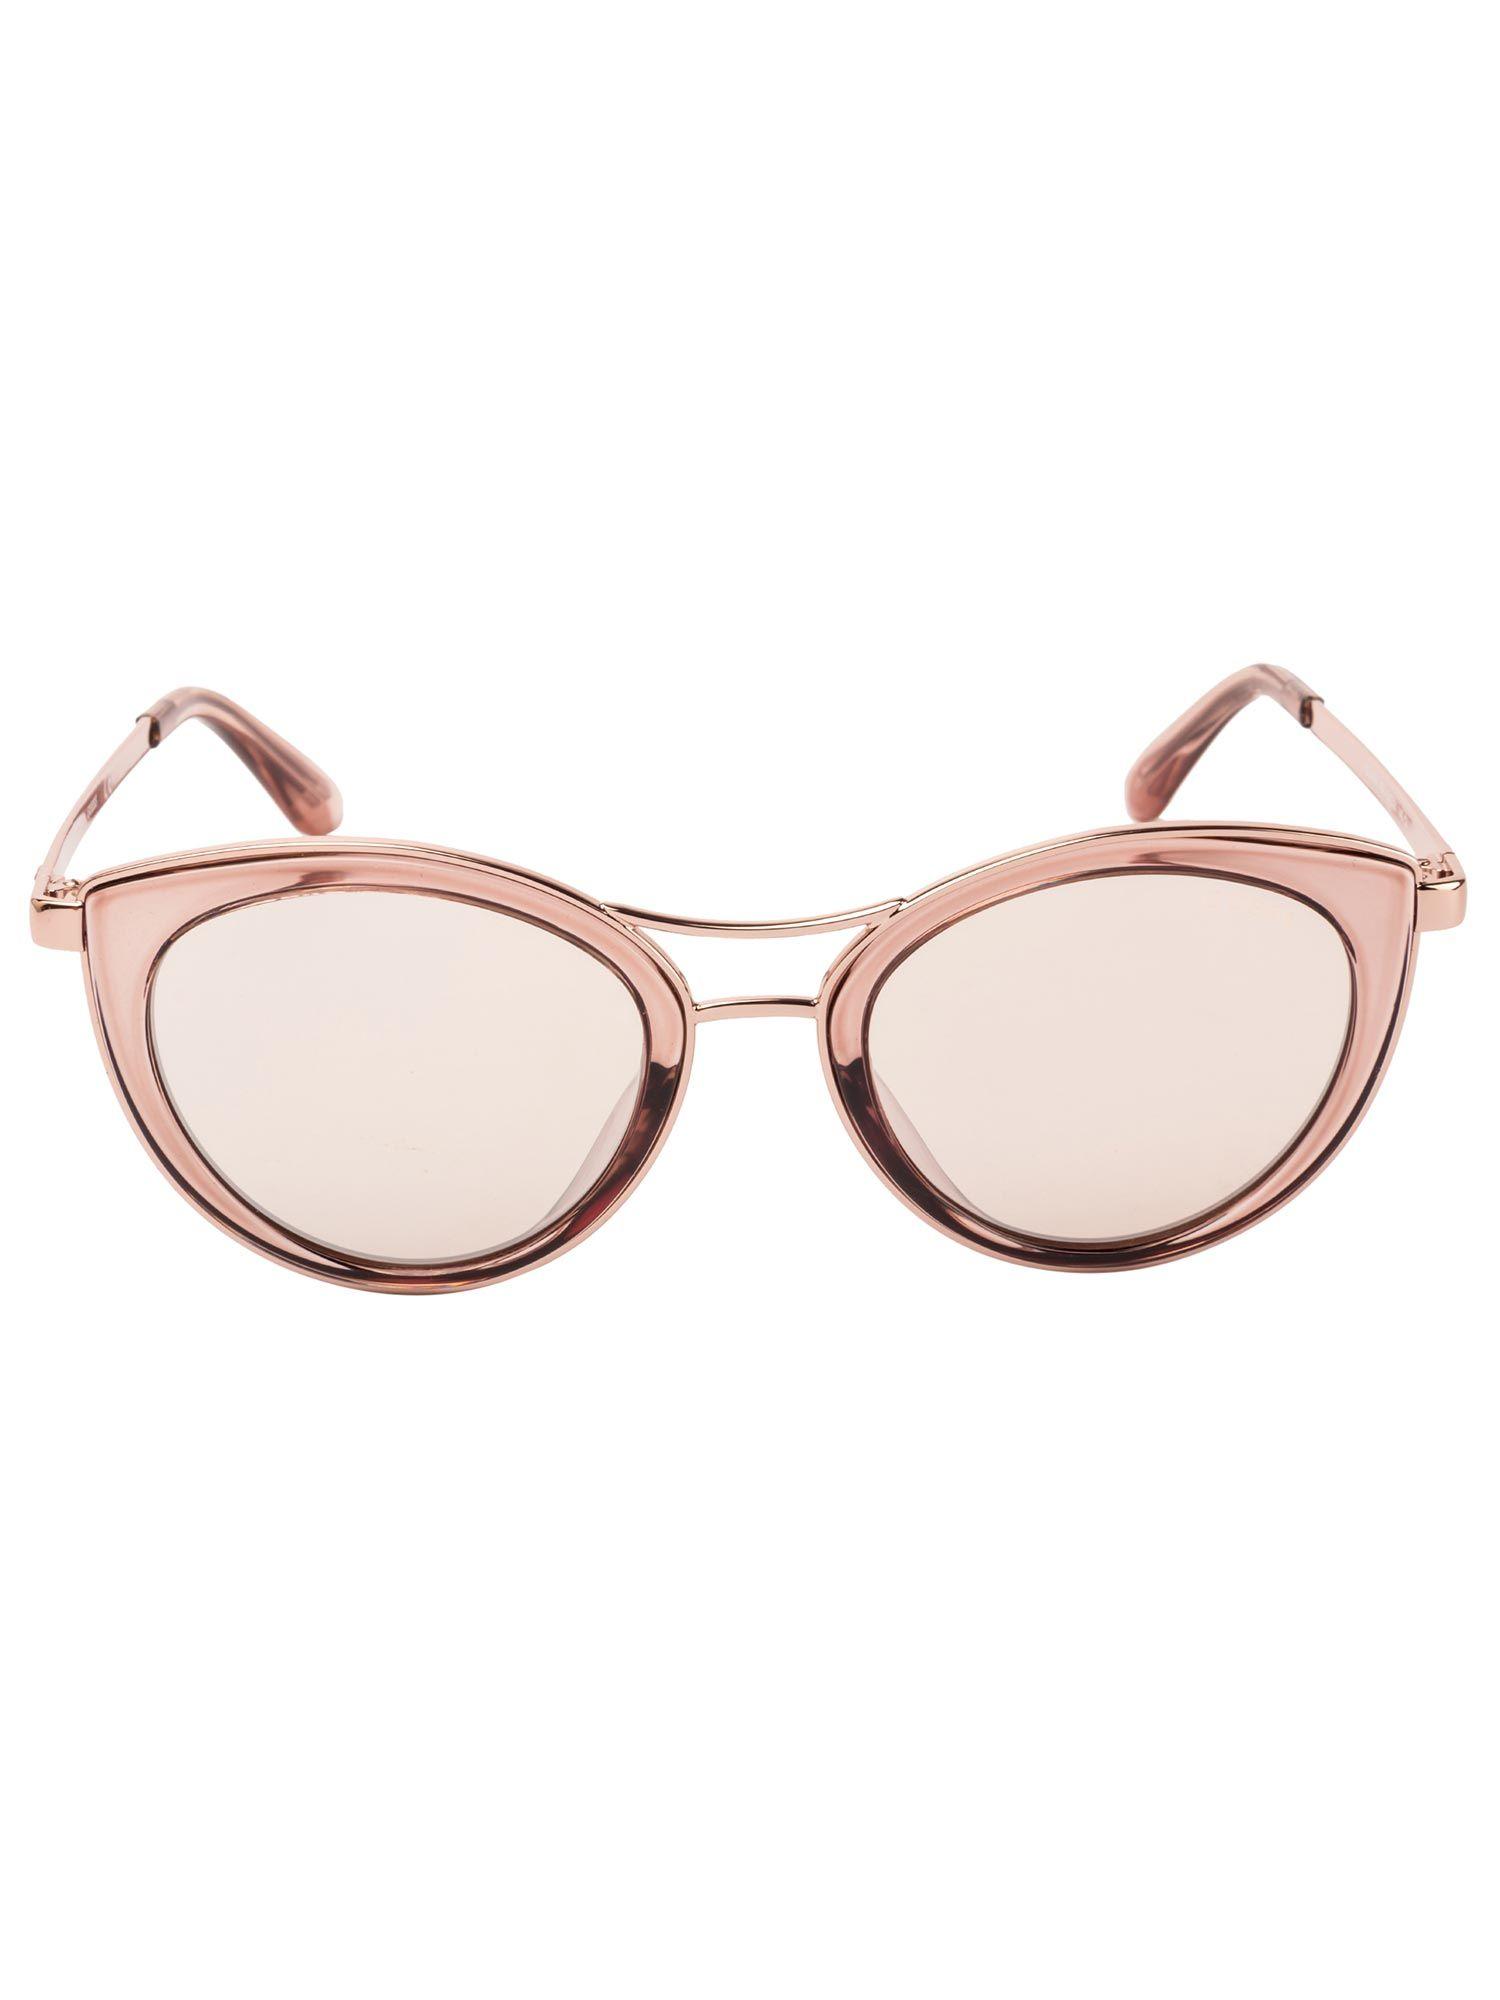 cat-eye sunglasses with rose gold lens for women